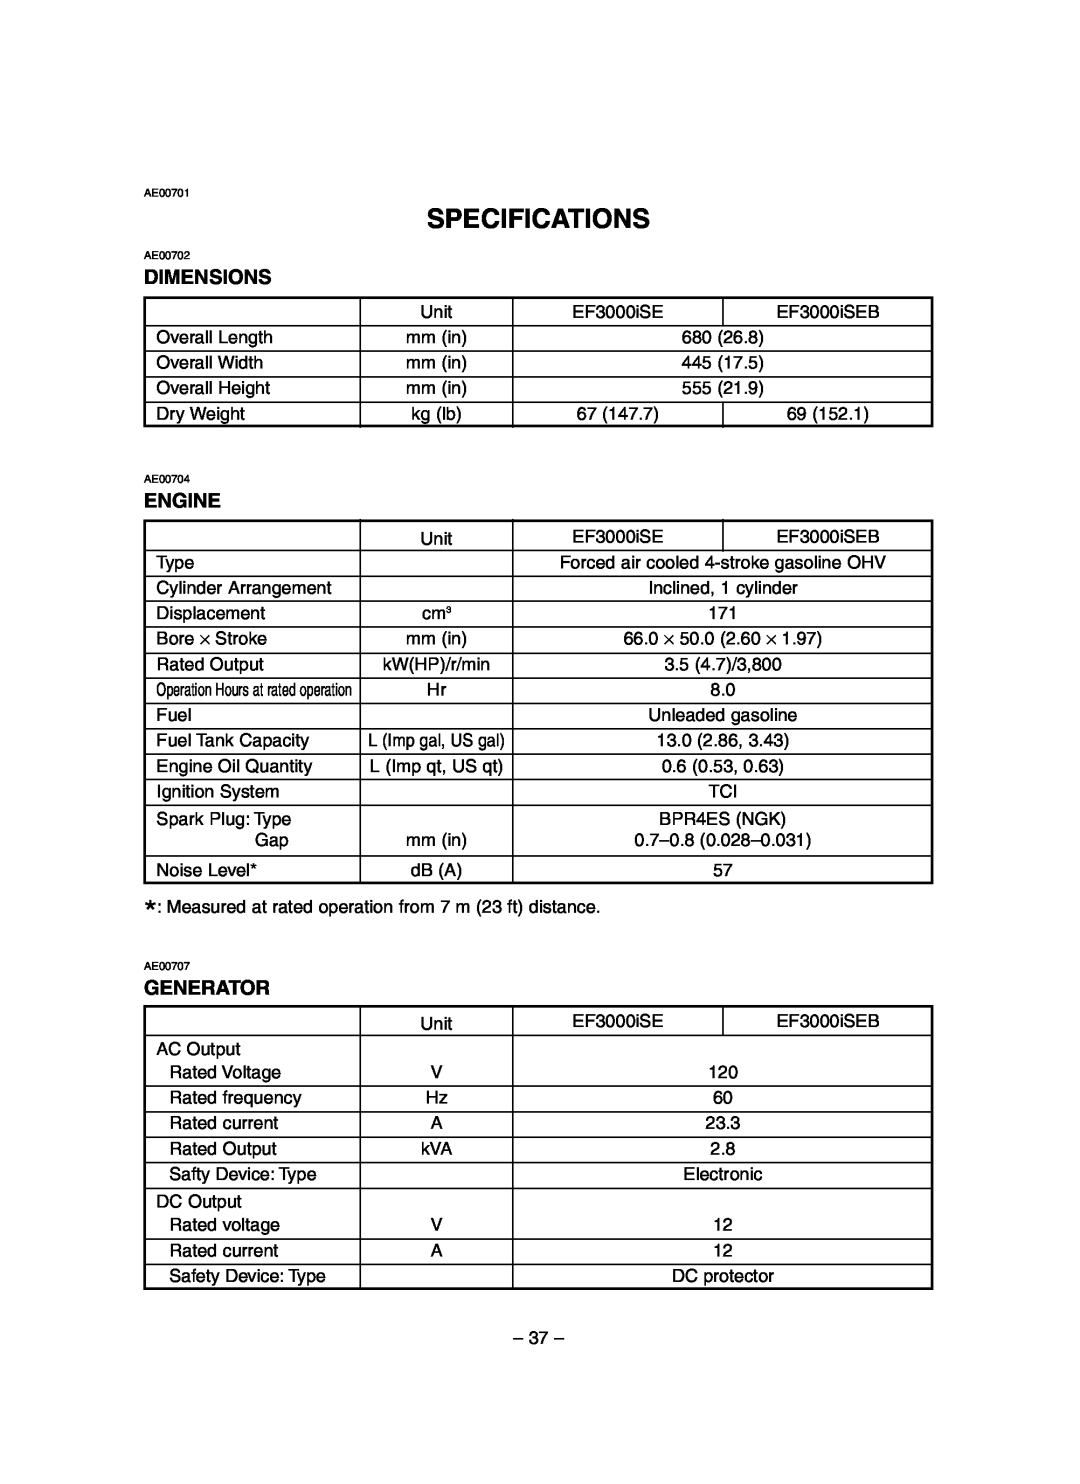 Yamaha EF3000iSE, EF3000iSEB owner manual Specifications, Dimensions, Engine, Generator, Spark Plug Gap 